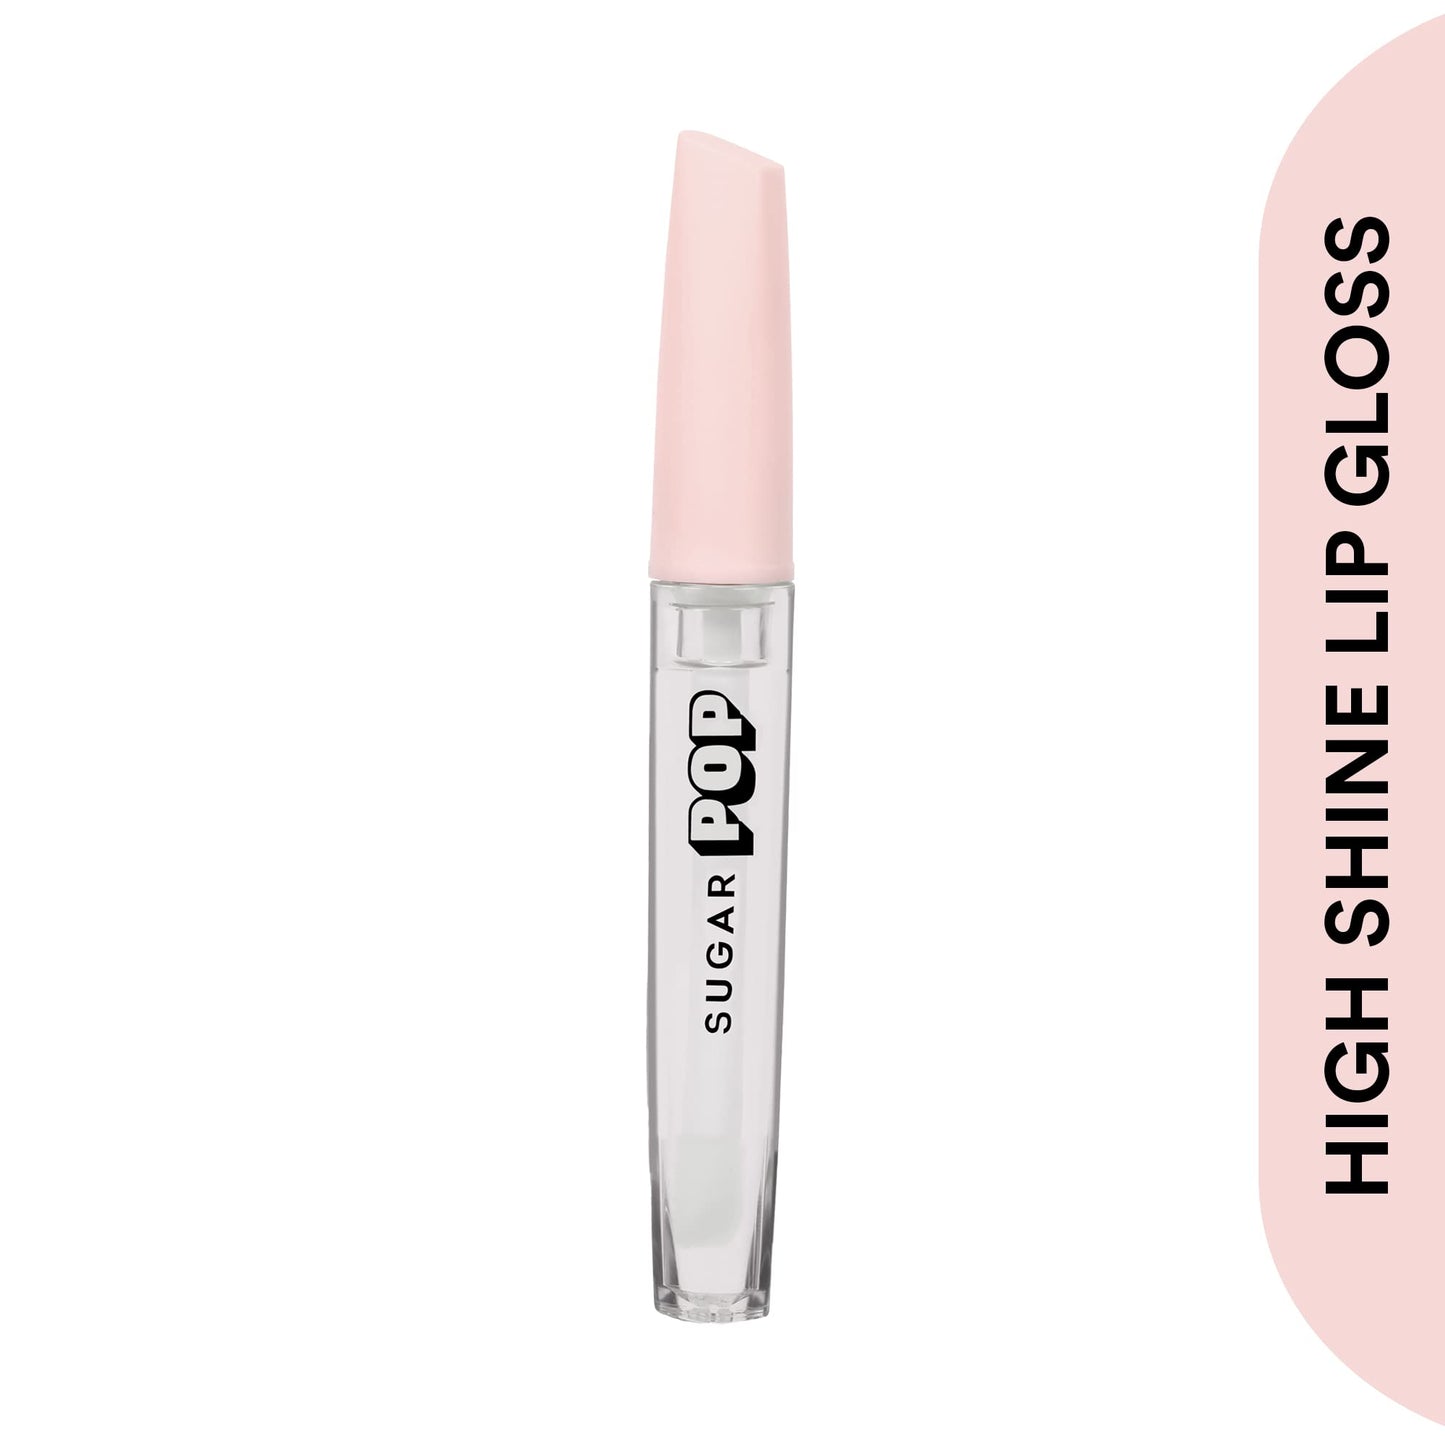 SUGAR POP High Shine Lip Gloss - 01 Marshmallow (Clear) Lip Plumping Gloss For Soft & Dewy Lips & SUGAR POP Nourishing Lip Balm Combo